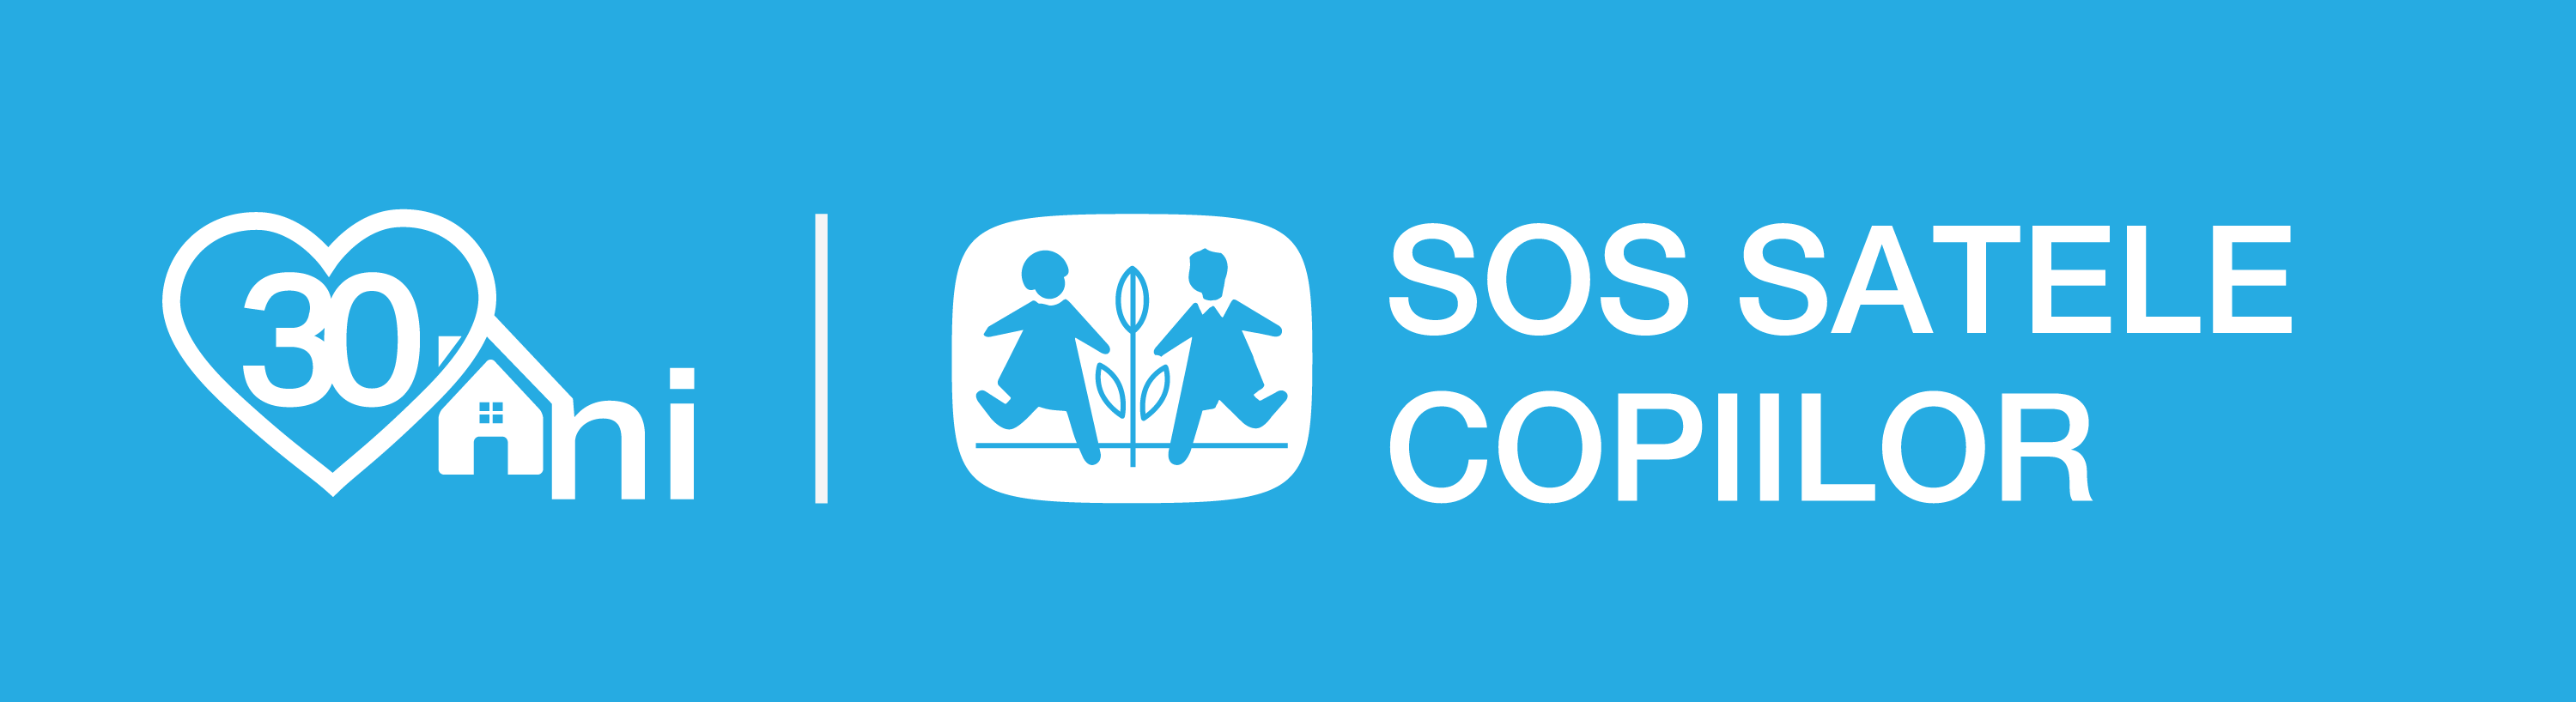 Asociația SOS Satele Copiilor România logo